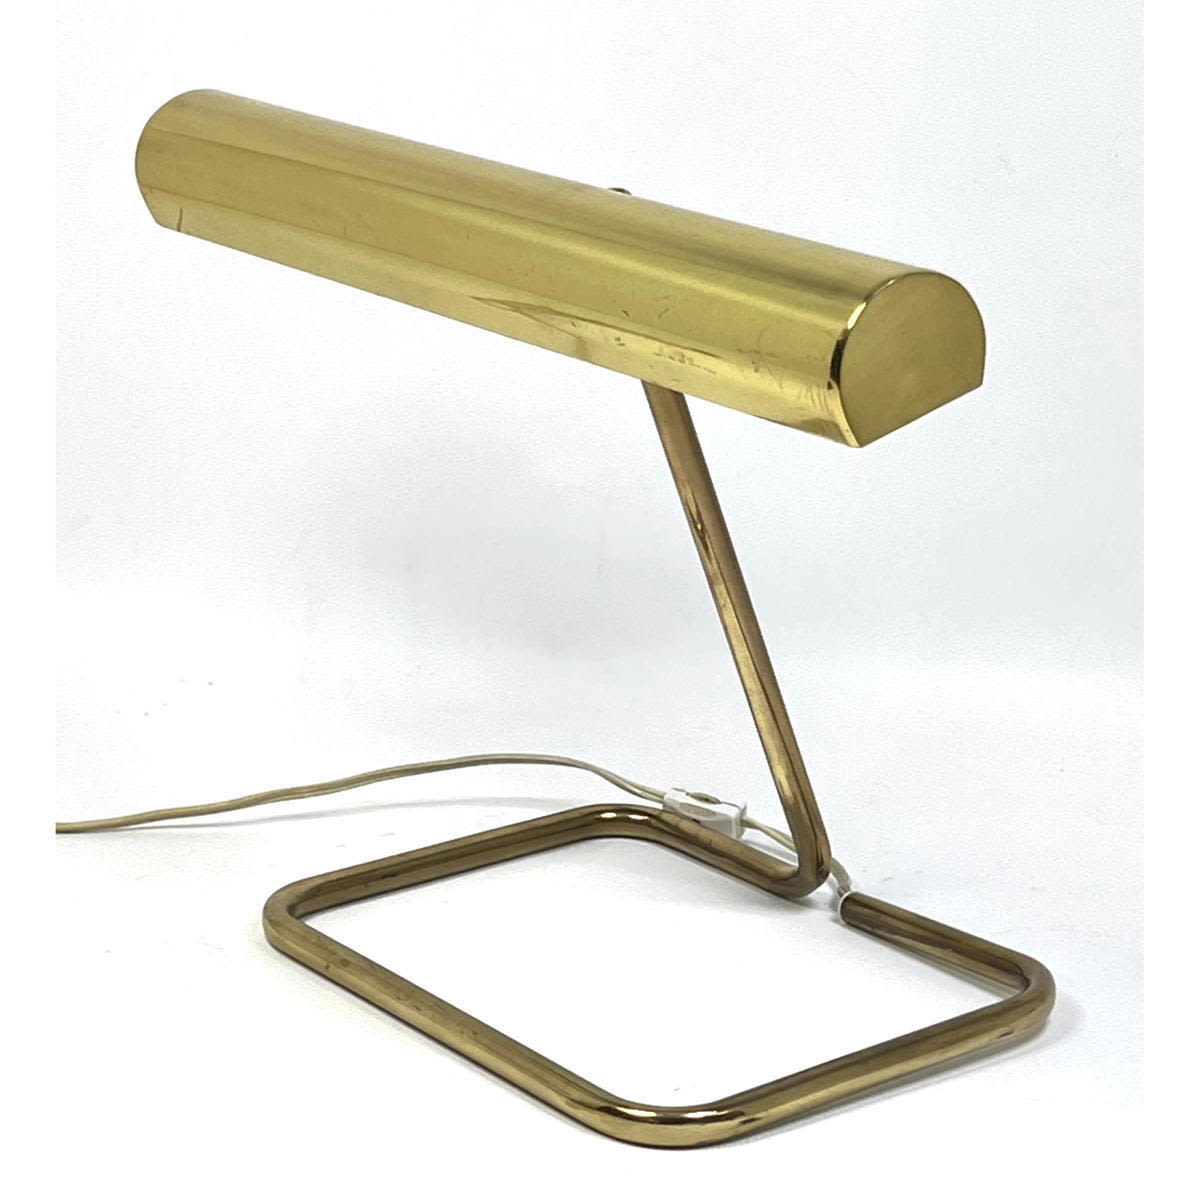 Koch and Lowy Brass desk lamp 

Dimensions: